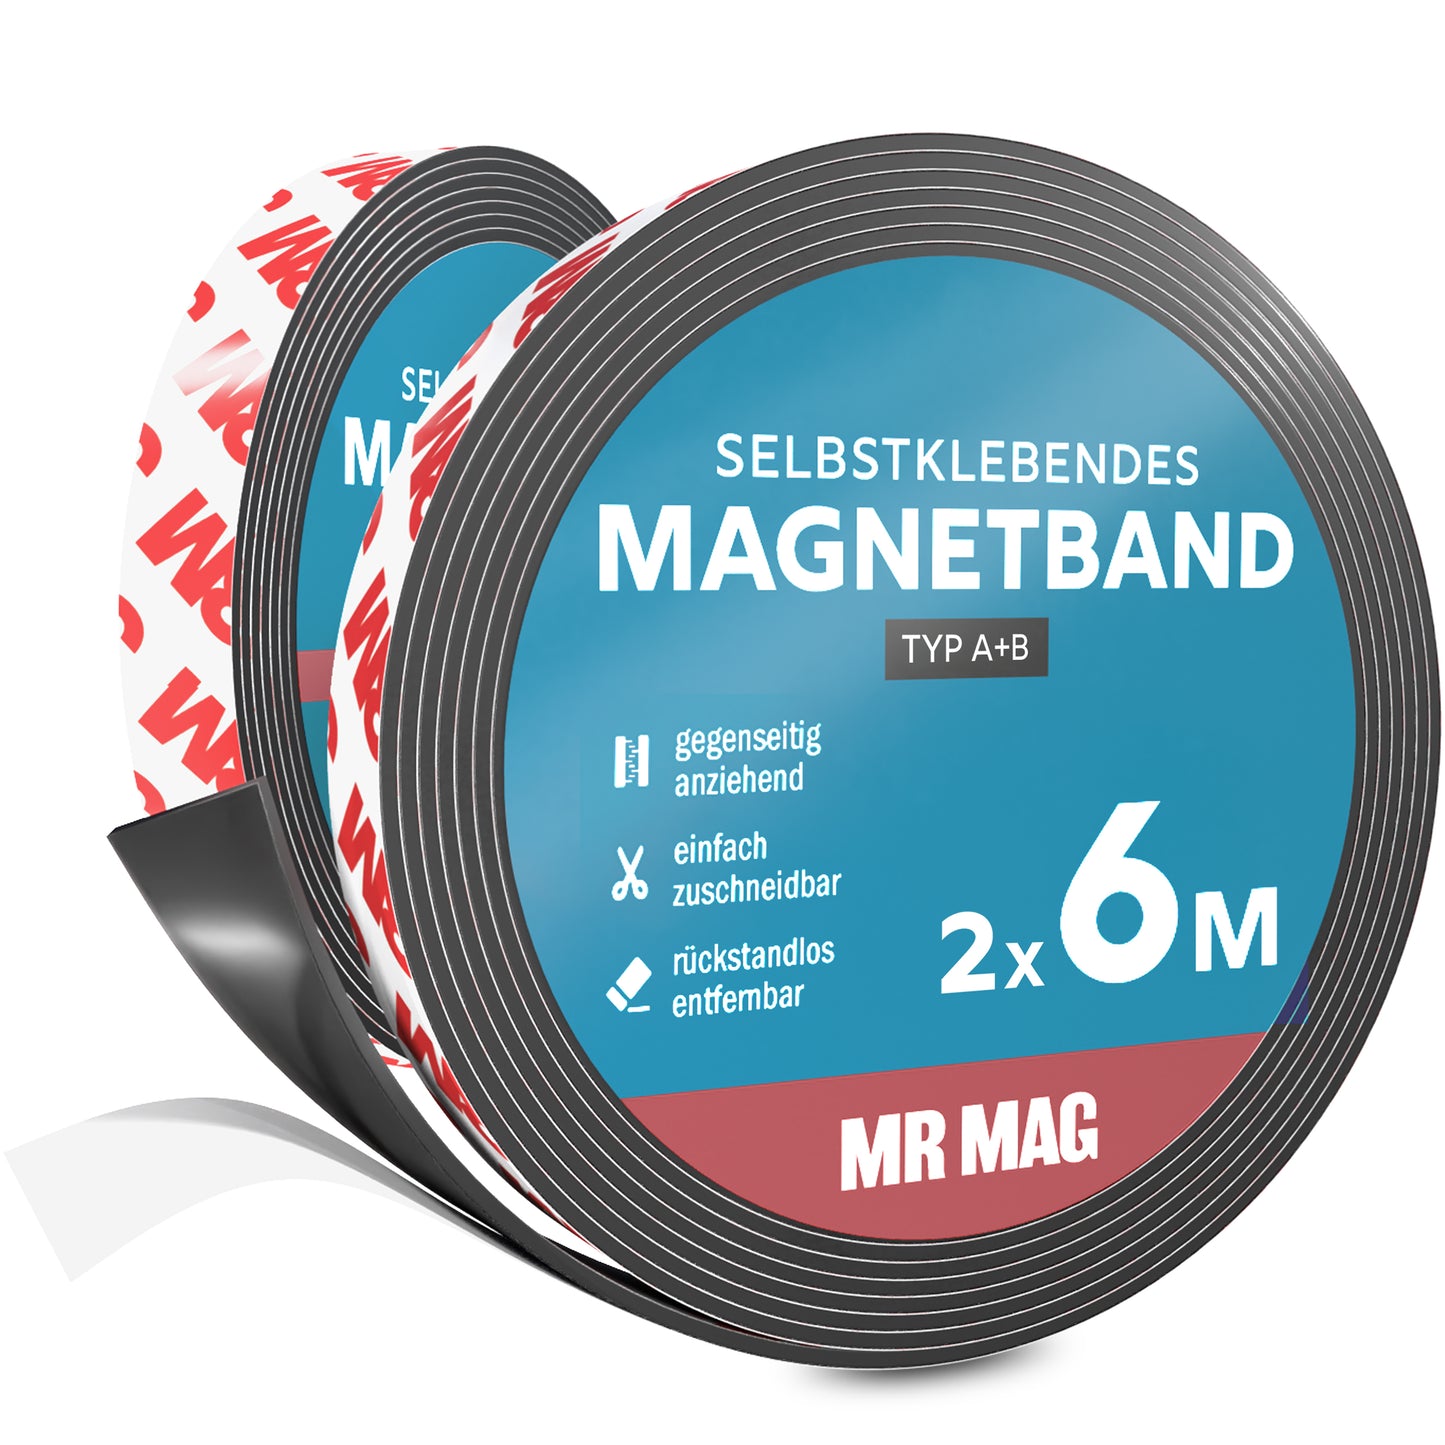 Selbstklebendes Magnetband - 2x 6m - TYP A+B